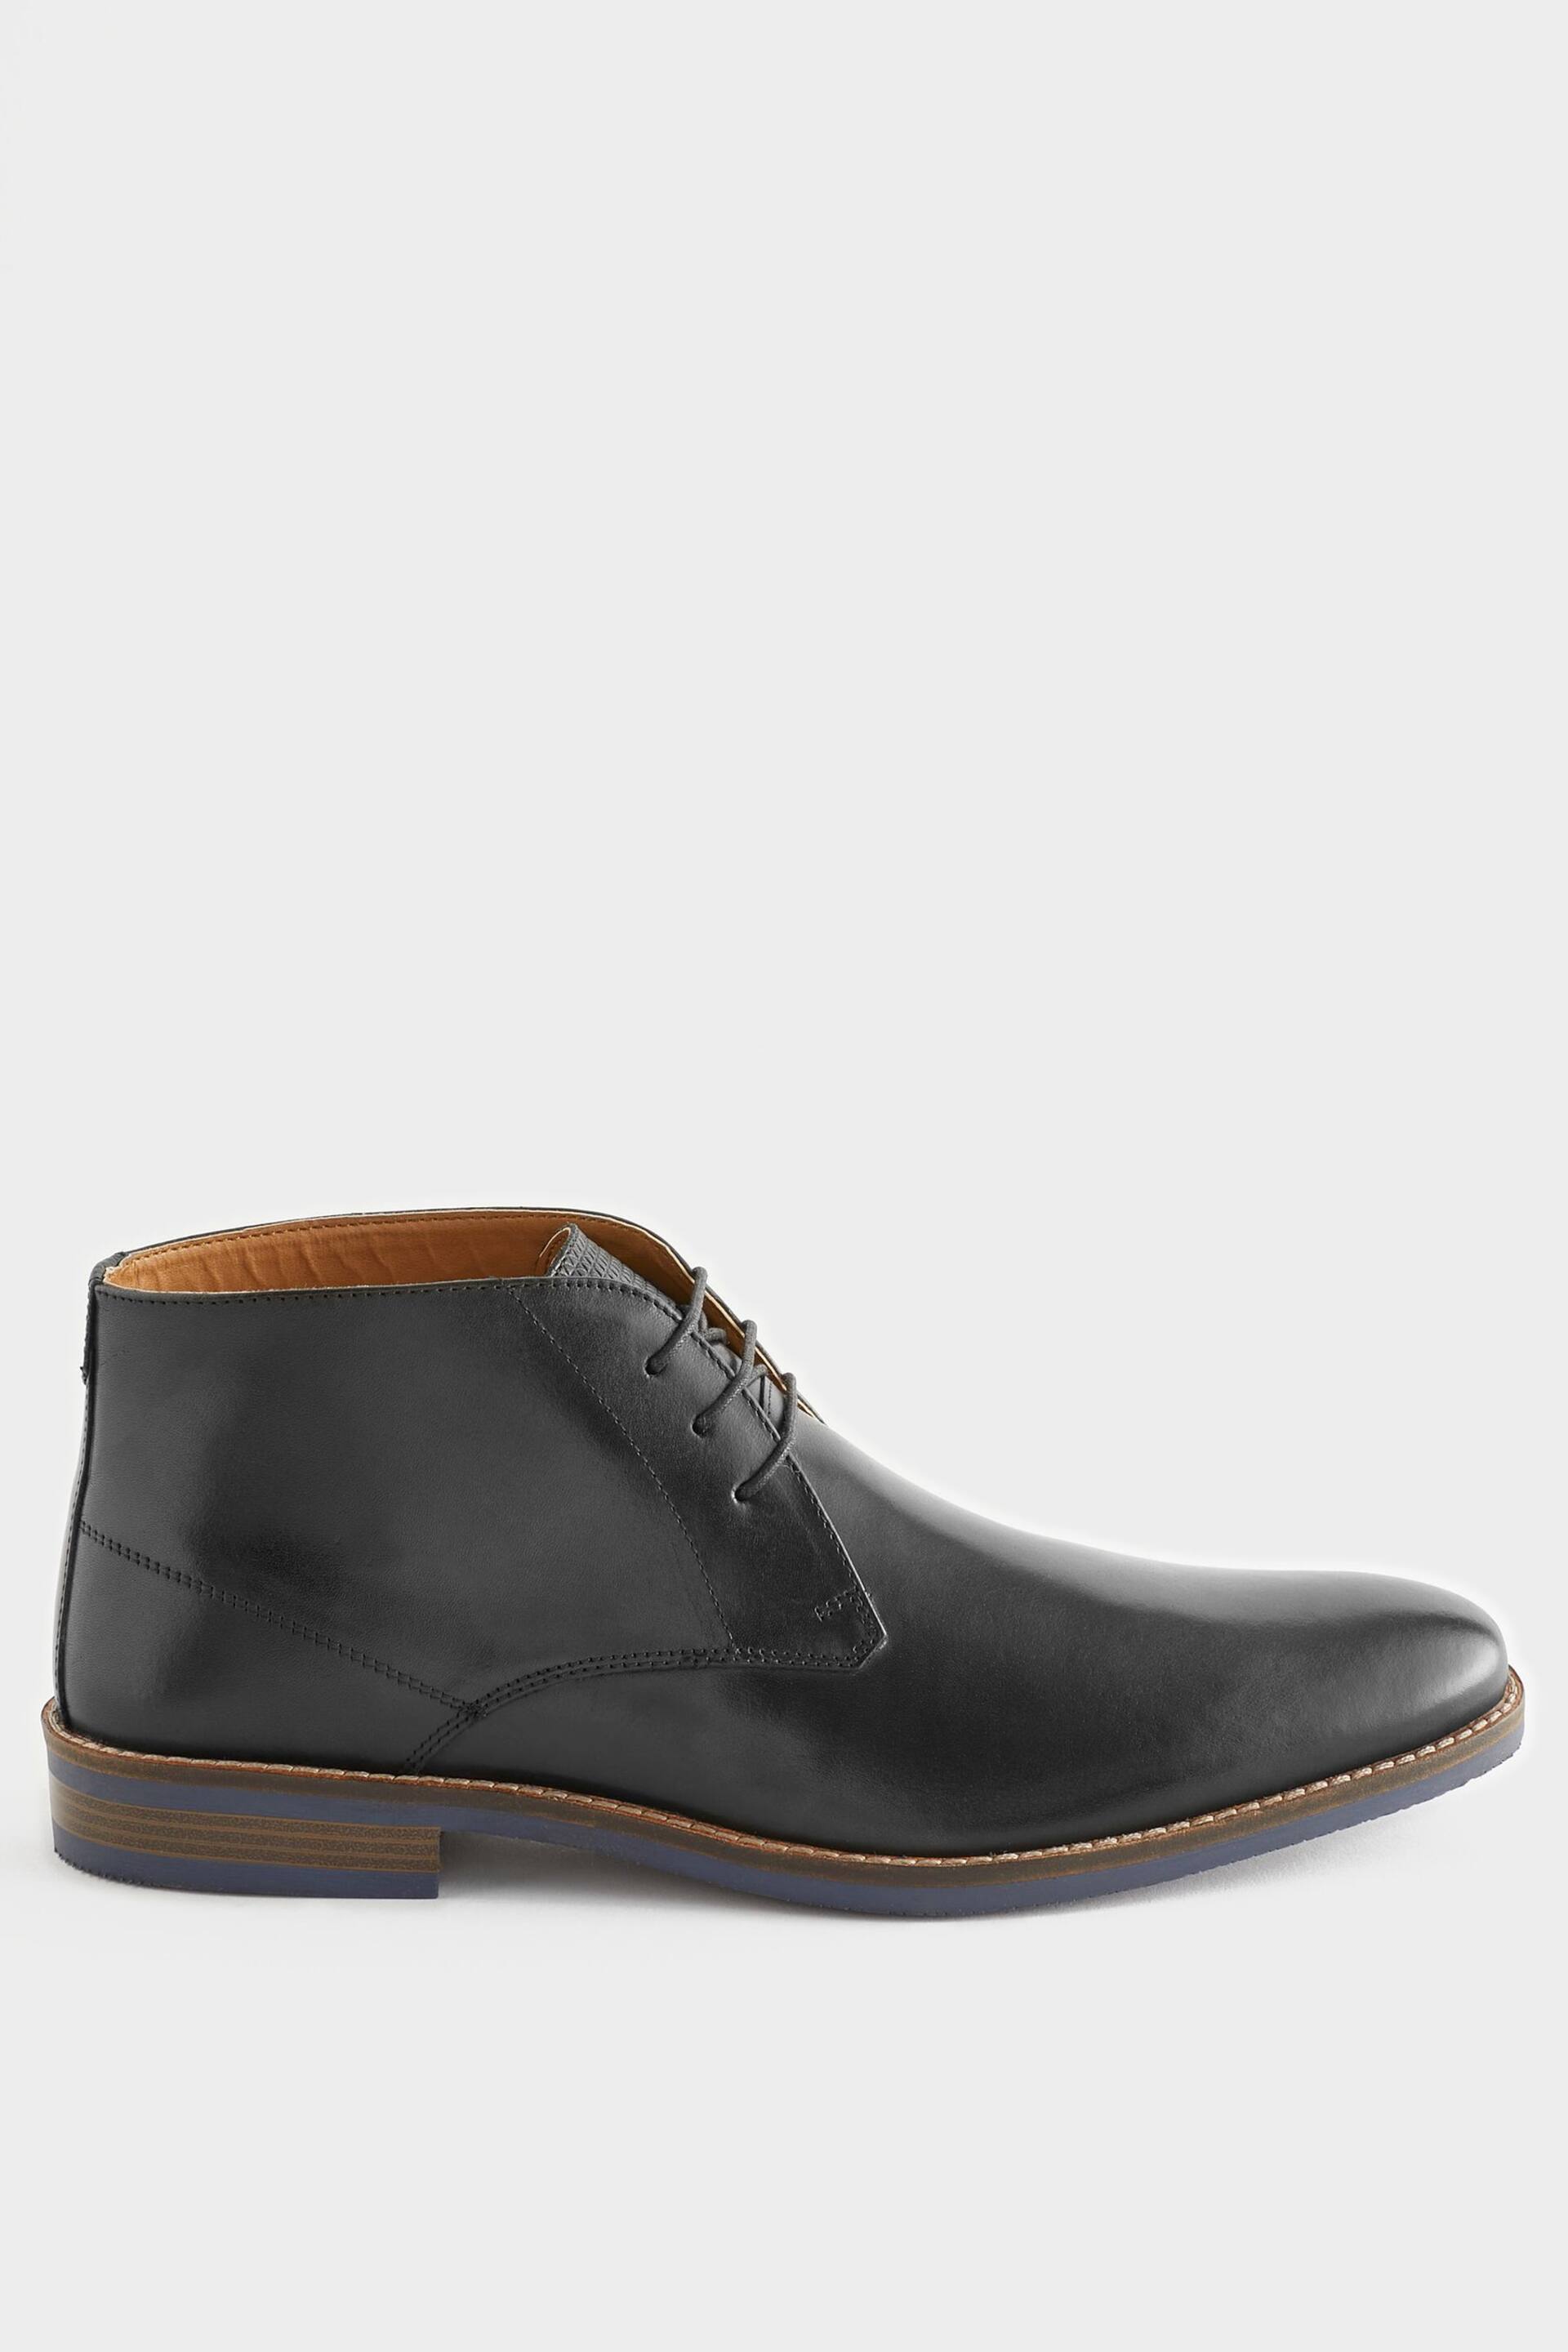 Black Leather Chukka Boots - Image 3 of 6